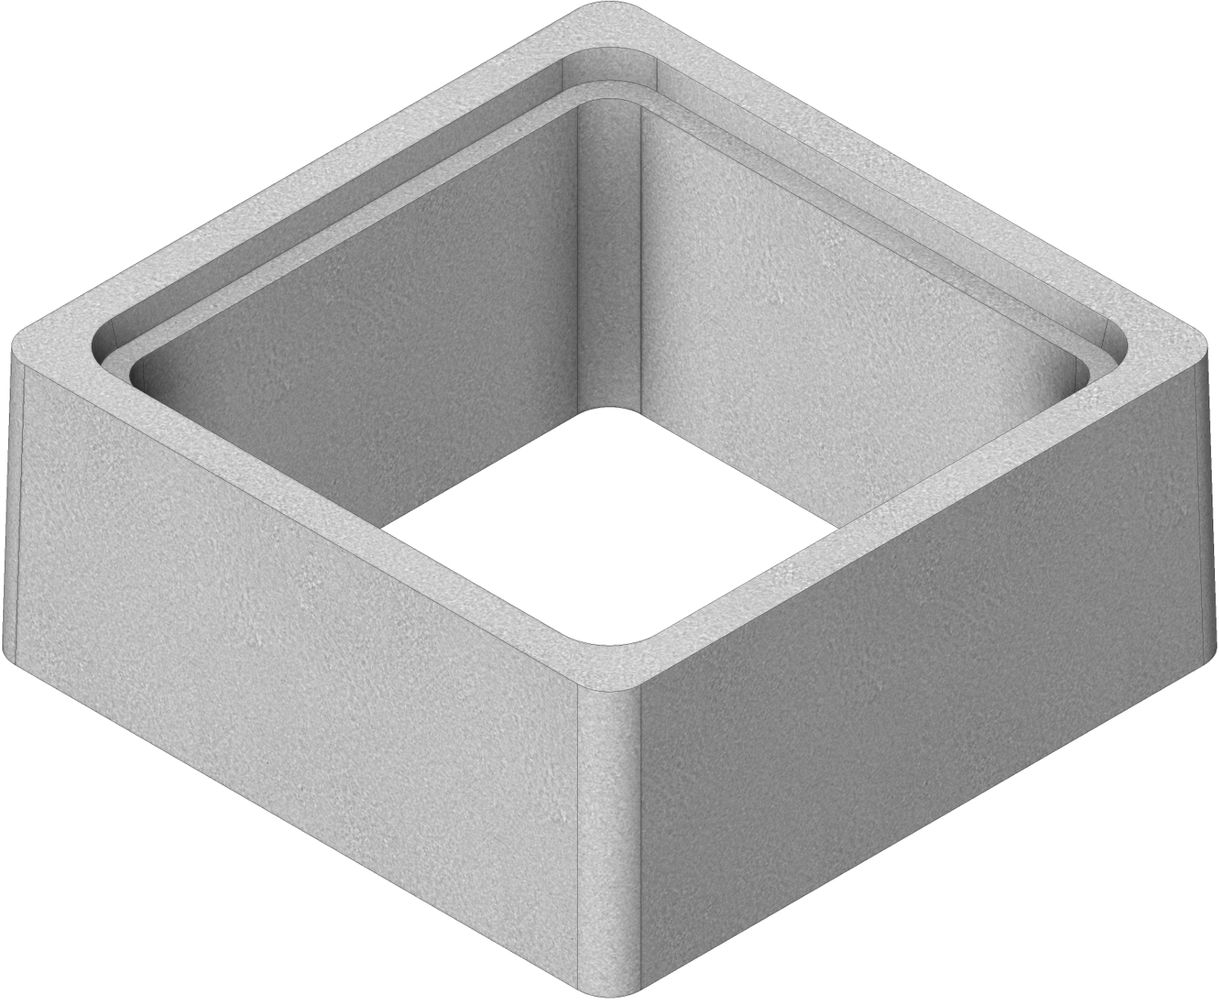 rehausse-beton-boite-pluviale-rp30-310x310-h200-thebault-0